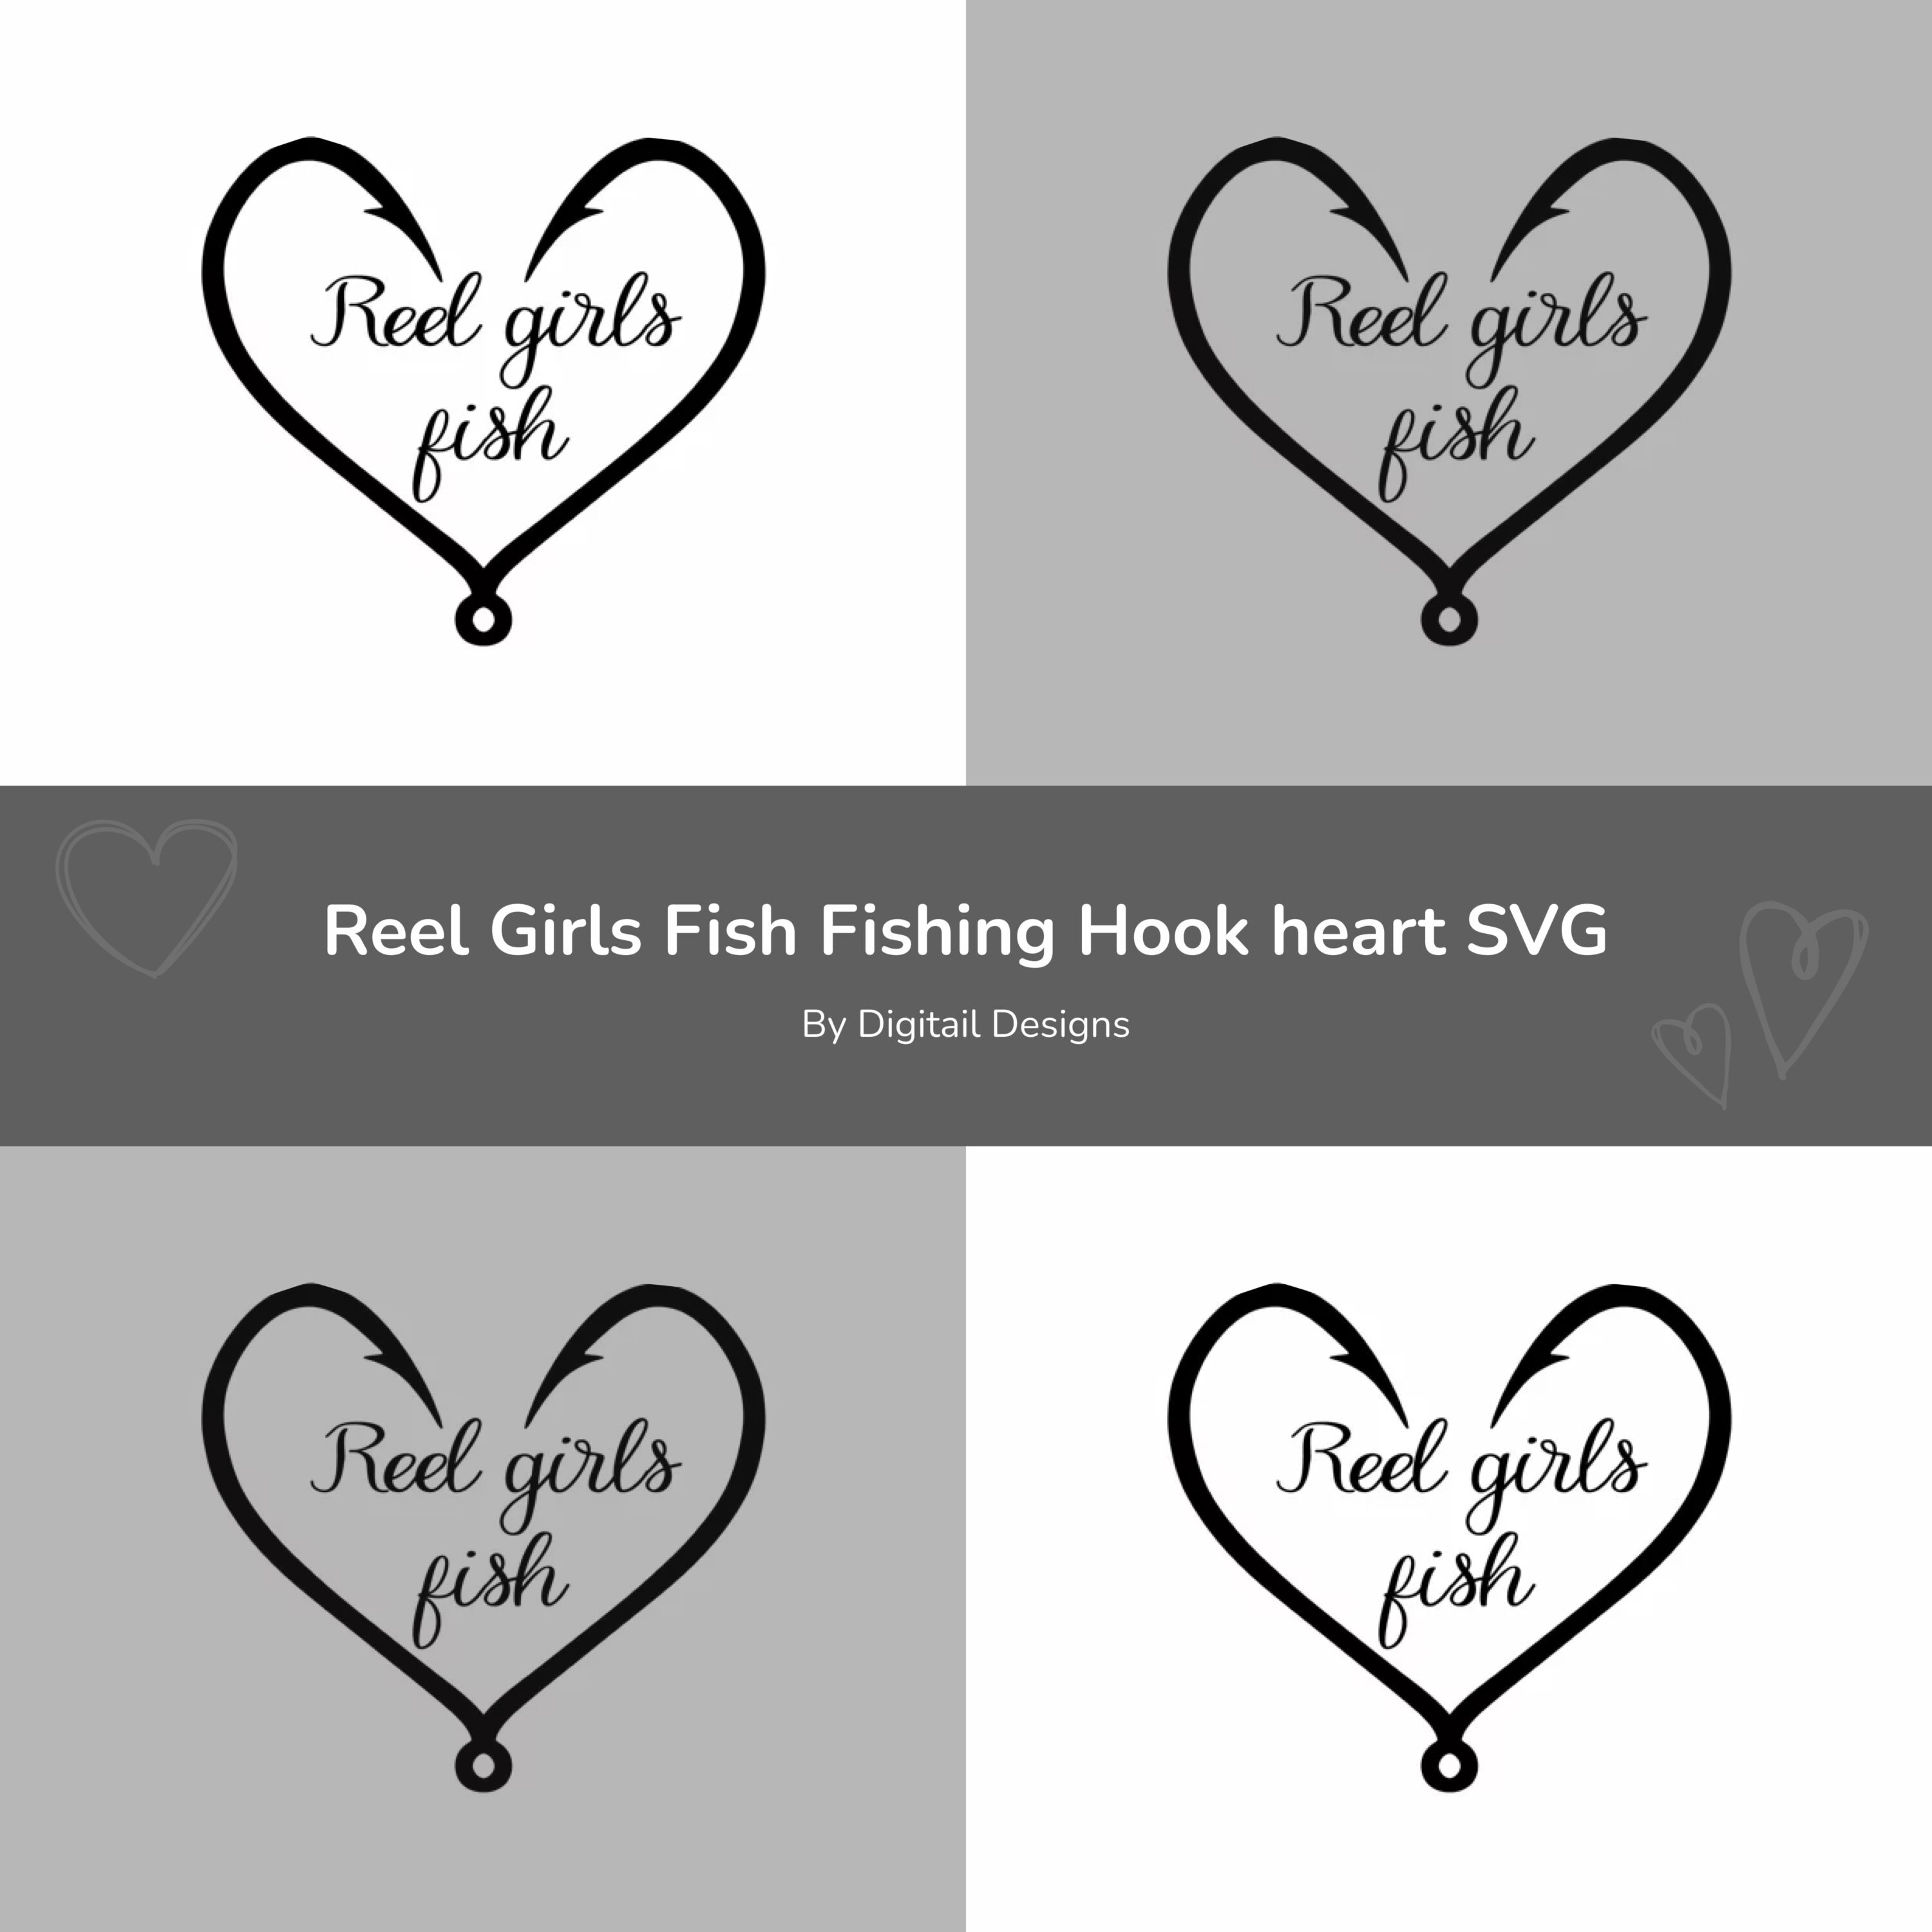 Reel Girls Fish Fishing Hook heart SVG.